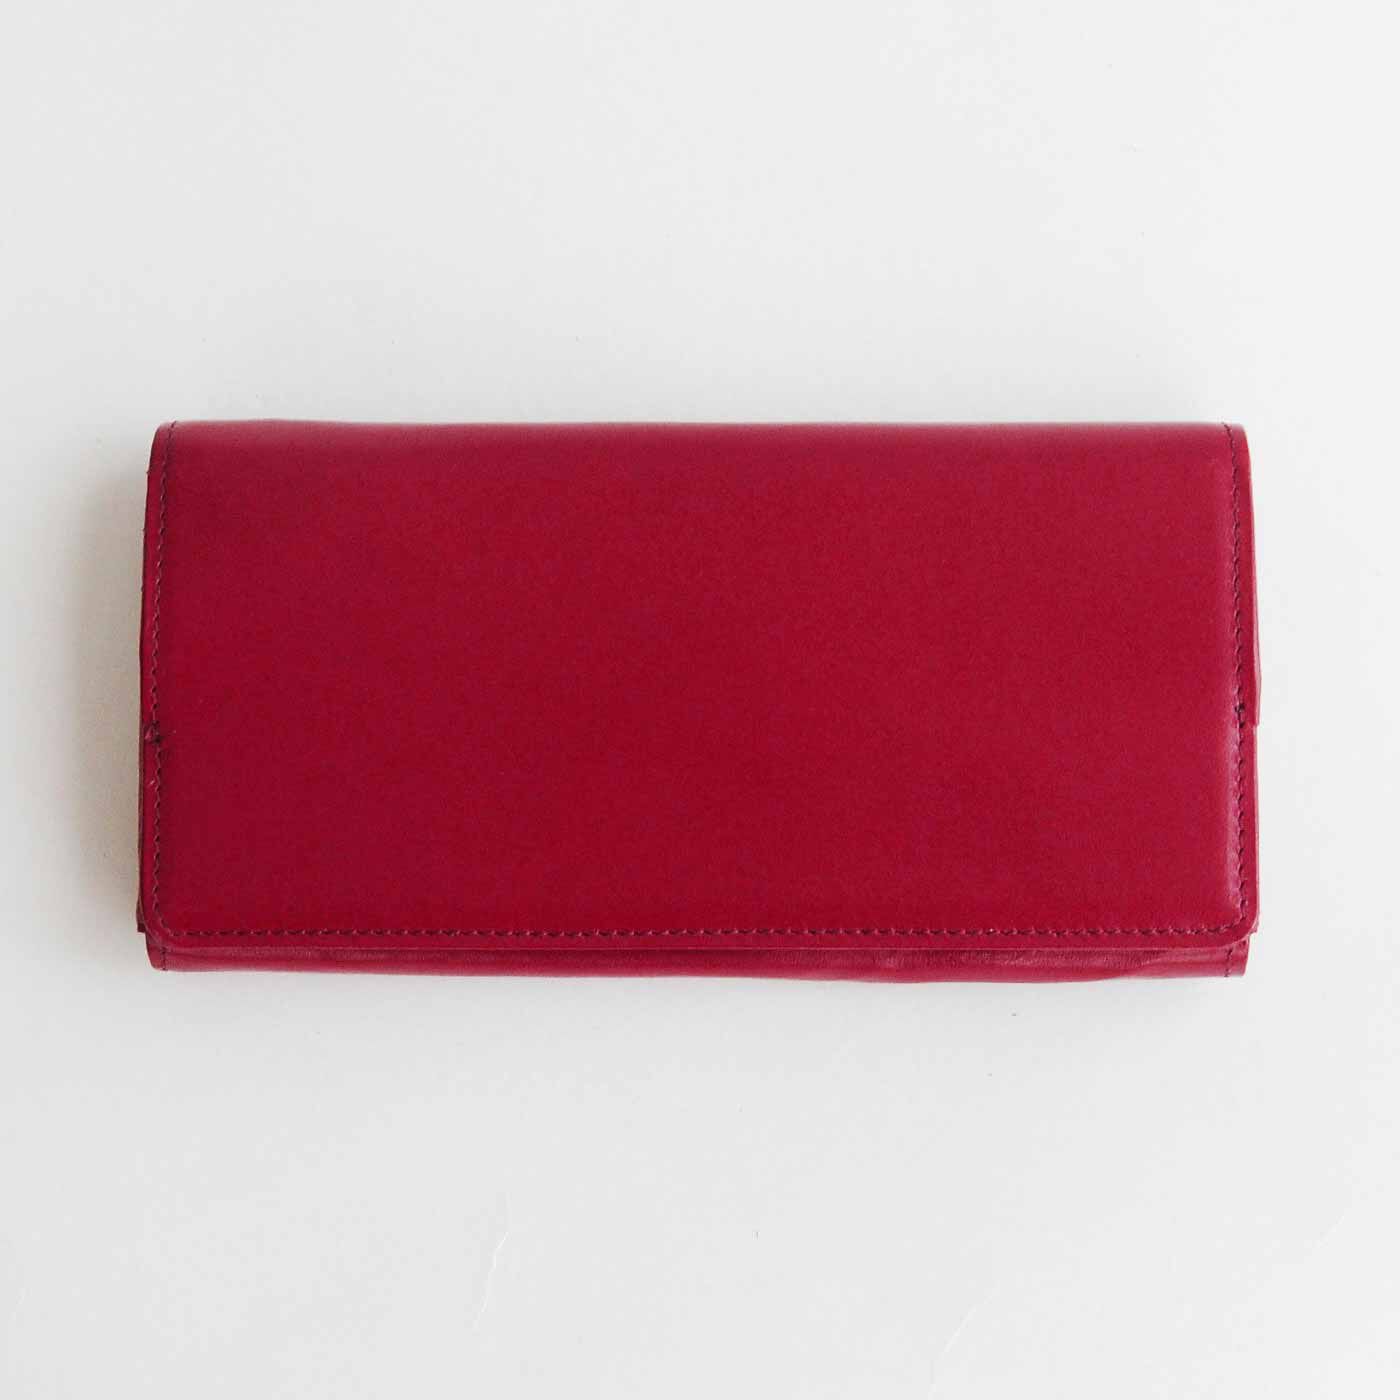 ＆Stories|職人仕上げの馬革ギャルソン財布〈薔薇色〉[本革 財布：日本製]|美しい薔薇色をイメージして馬革。財布正面も上品な仕上がり。